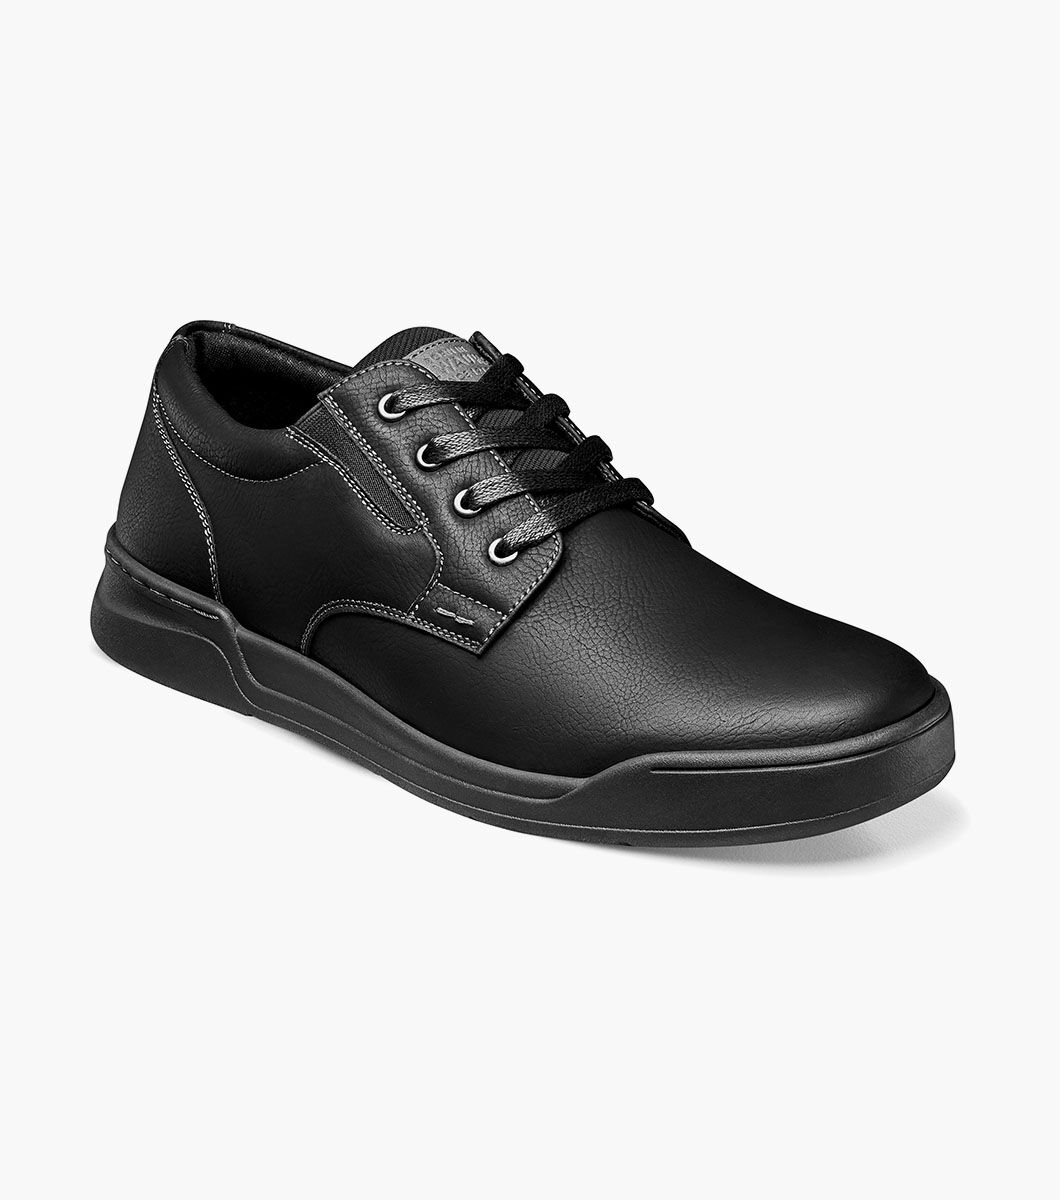 Nunn Bush Shoes Tour Work Plain Toe Oxford Black Smooth Size 12